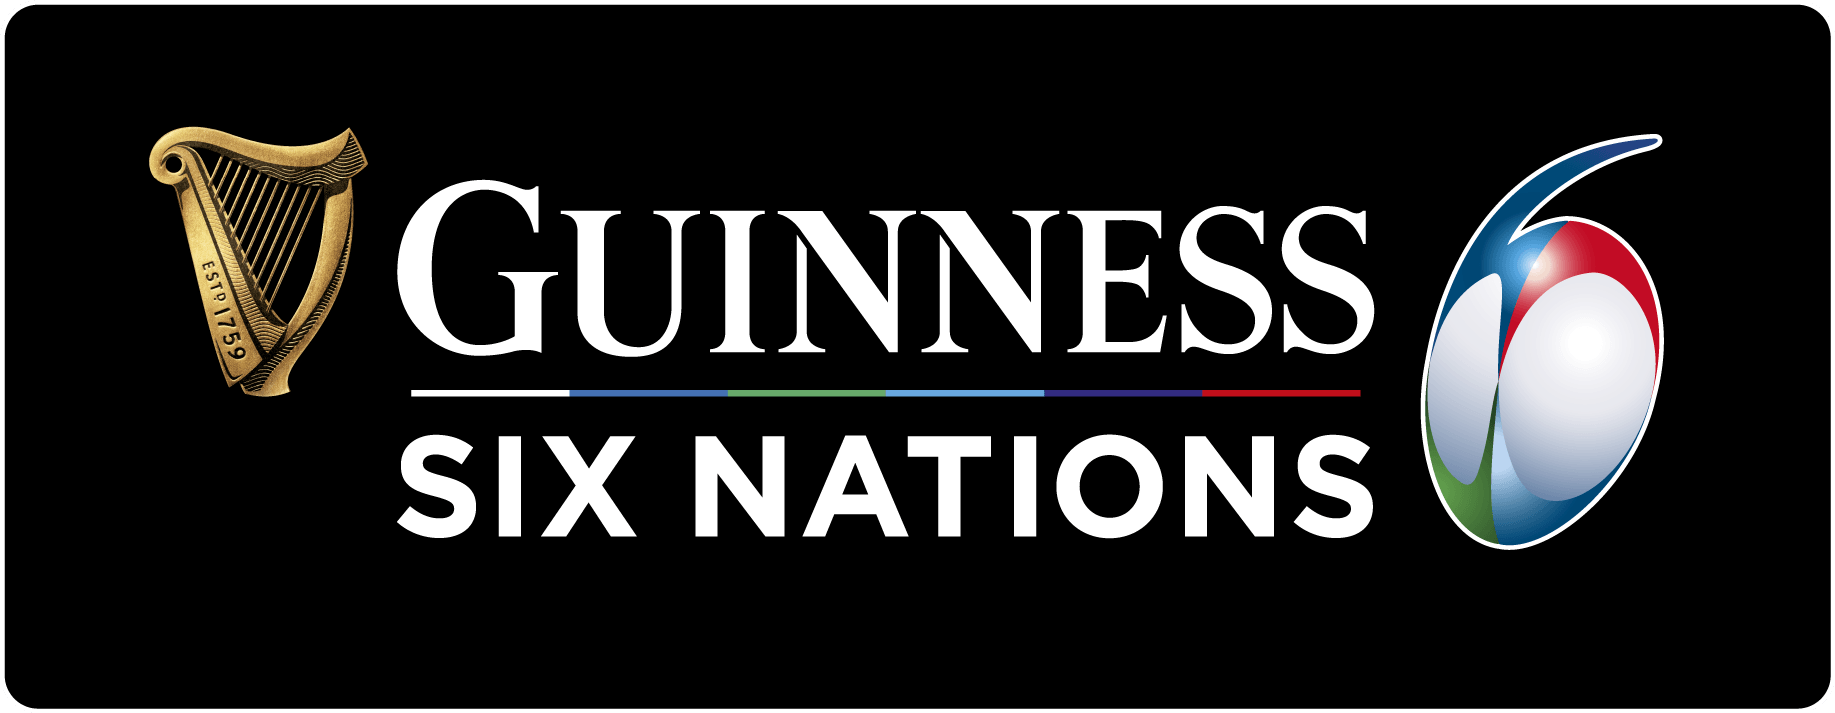 Guinness Font Logo - Six Nations Fixtures – Ganley's